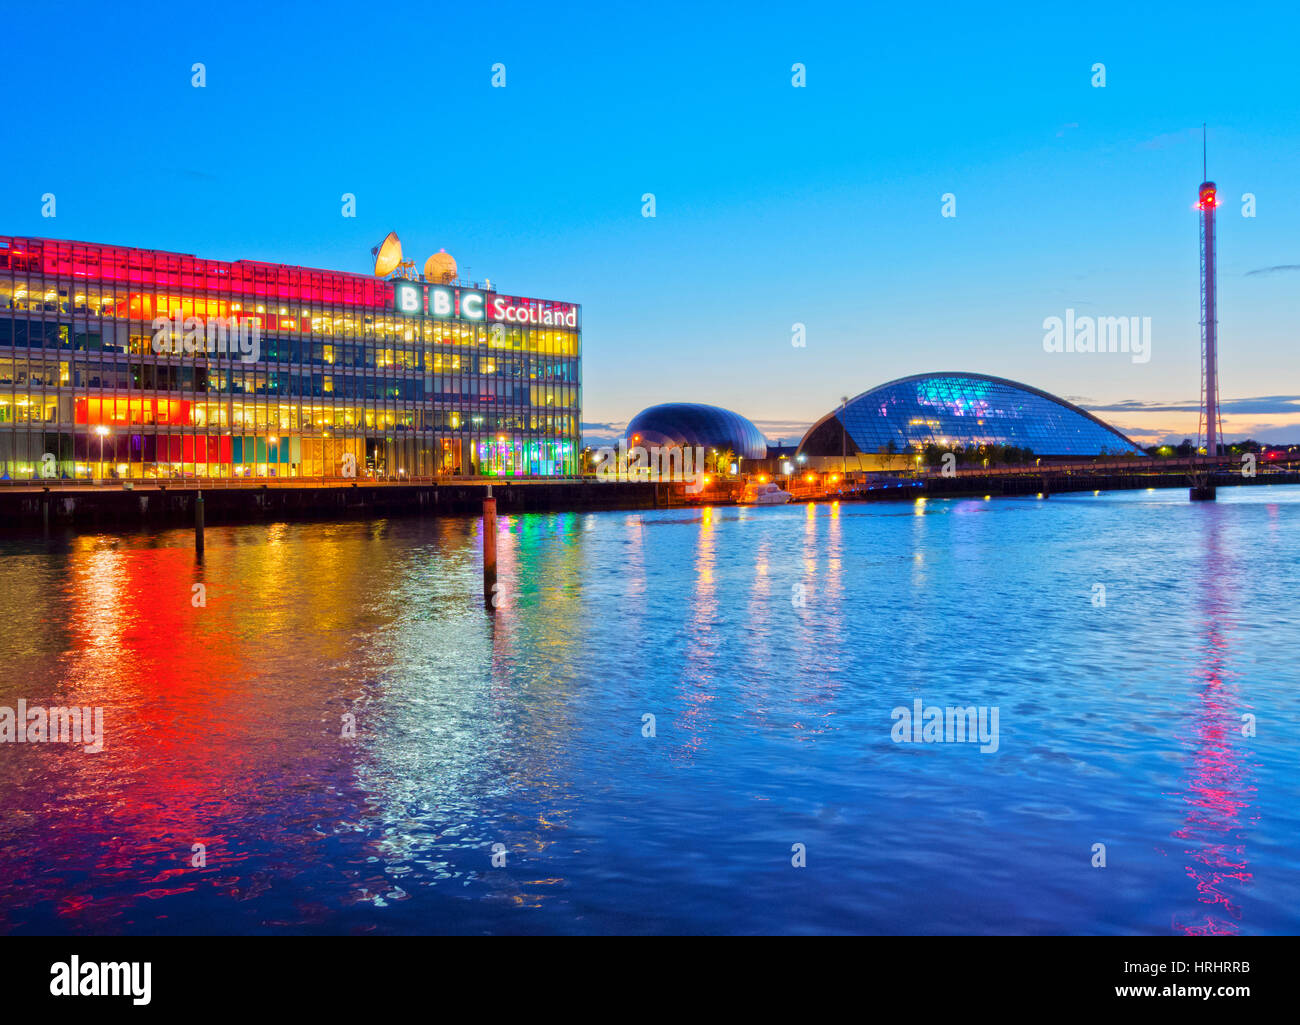 Twilight view of the BBC Scotland and the Glasgow Science Centre, Glasgow, Scotland, United Kingdom Stock Photo